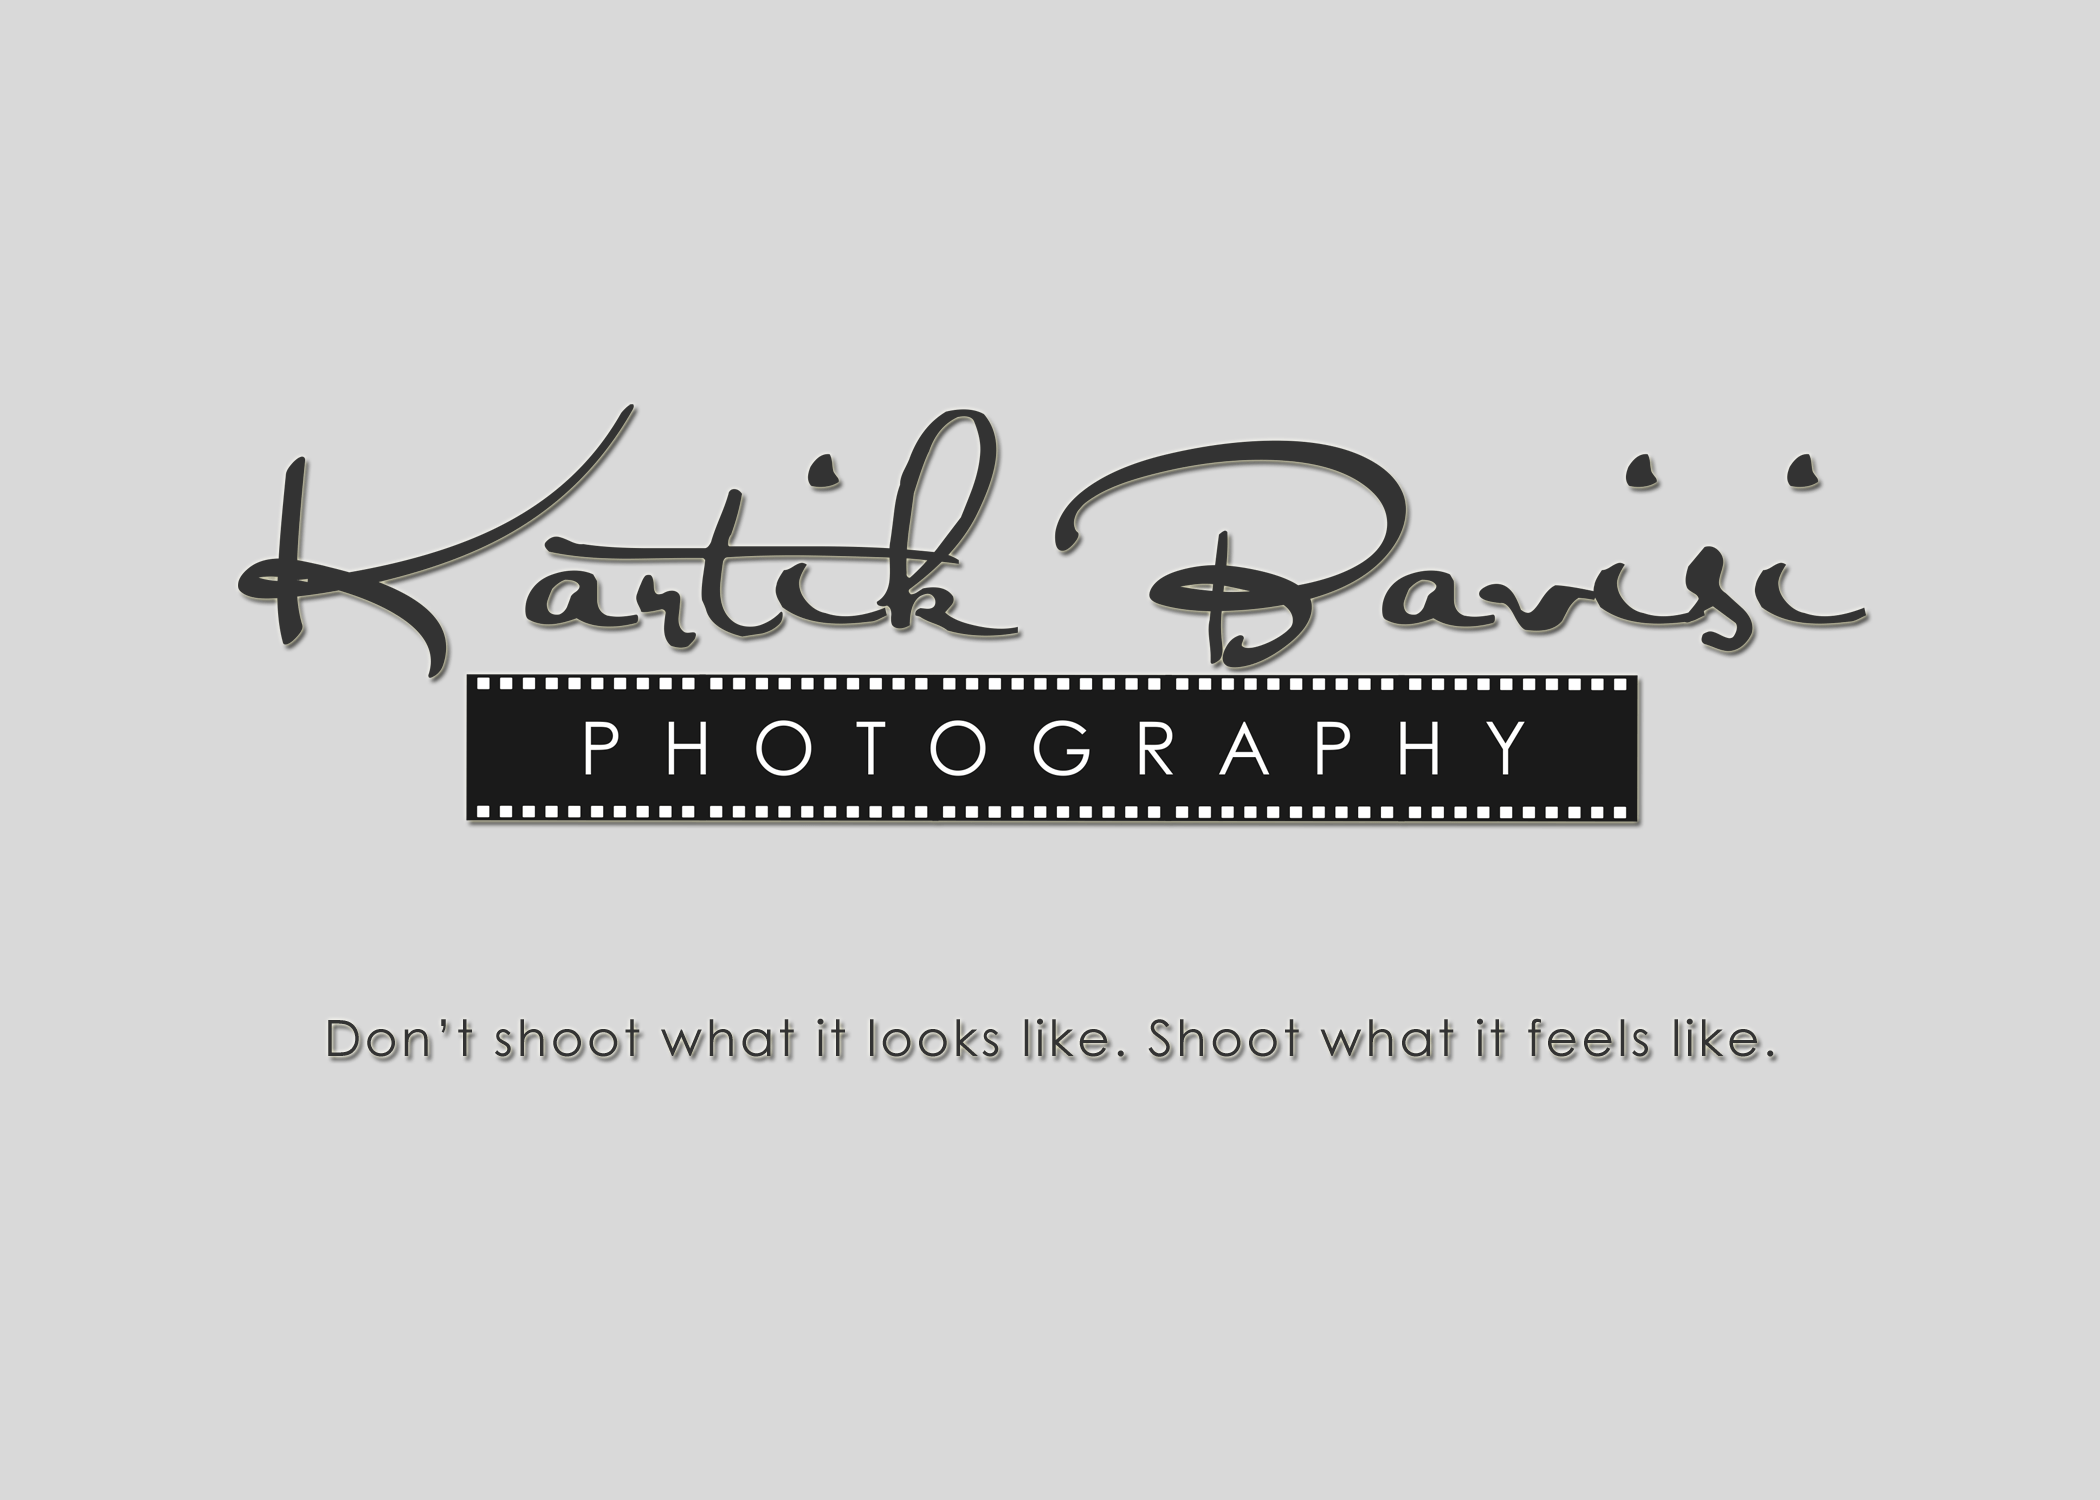 Great Photography Logo - Kartik Bavisi Photography LOGO